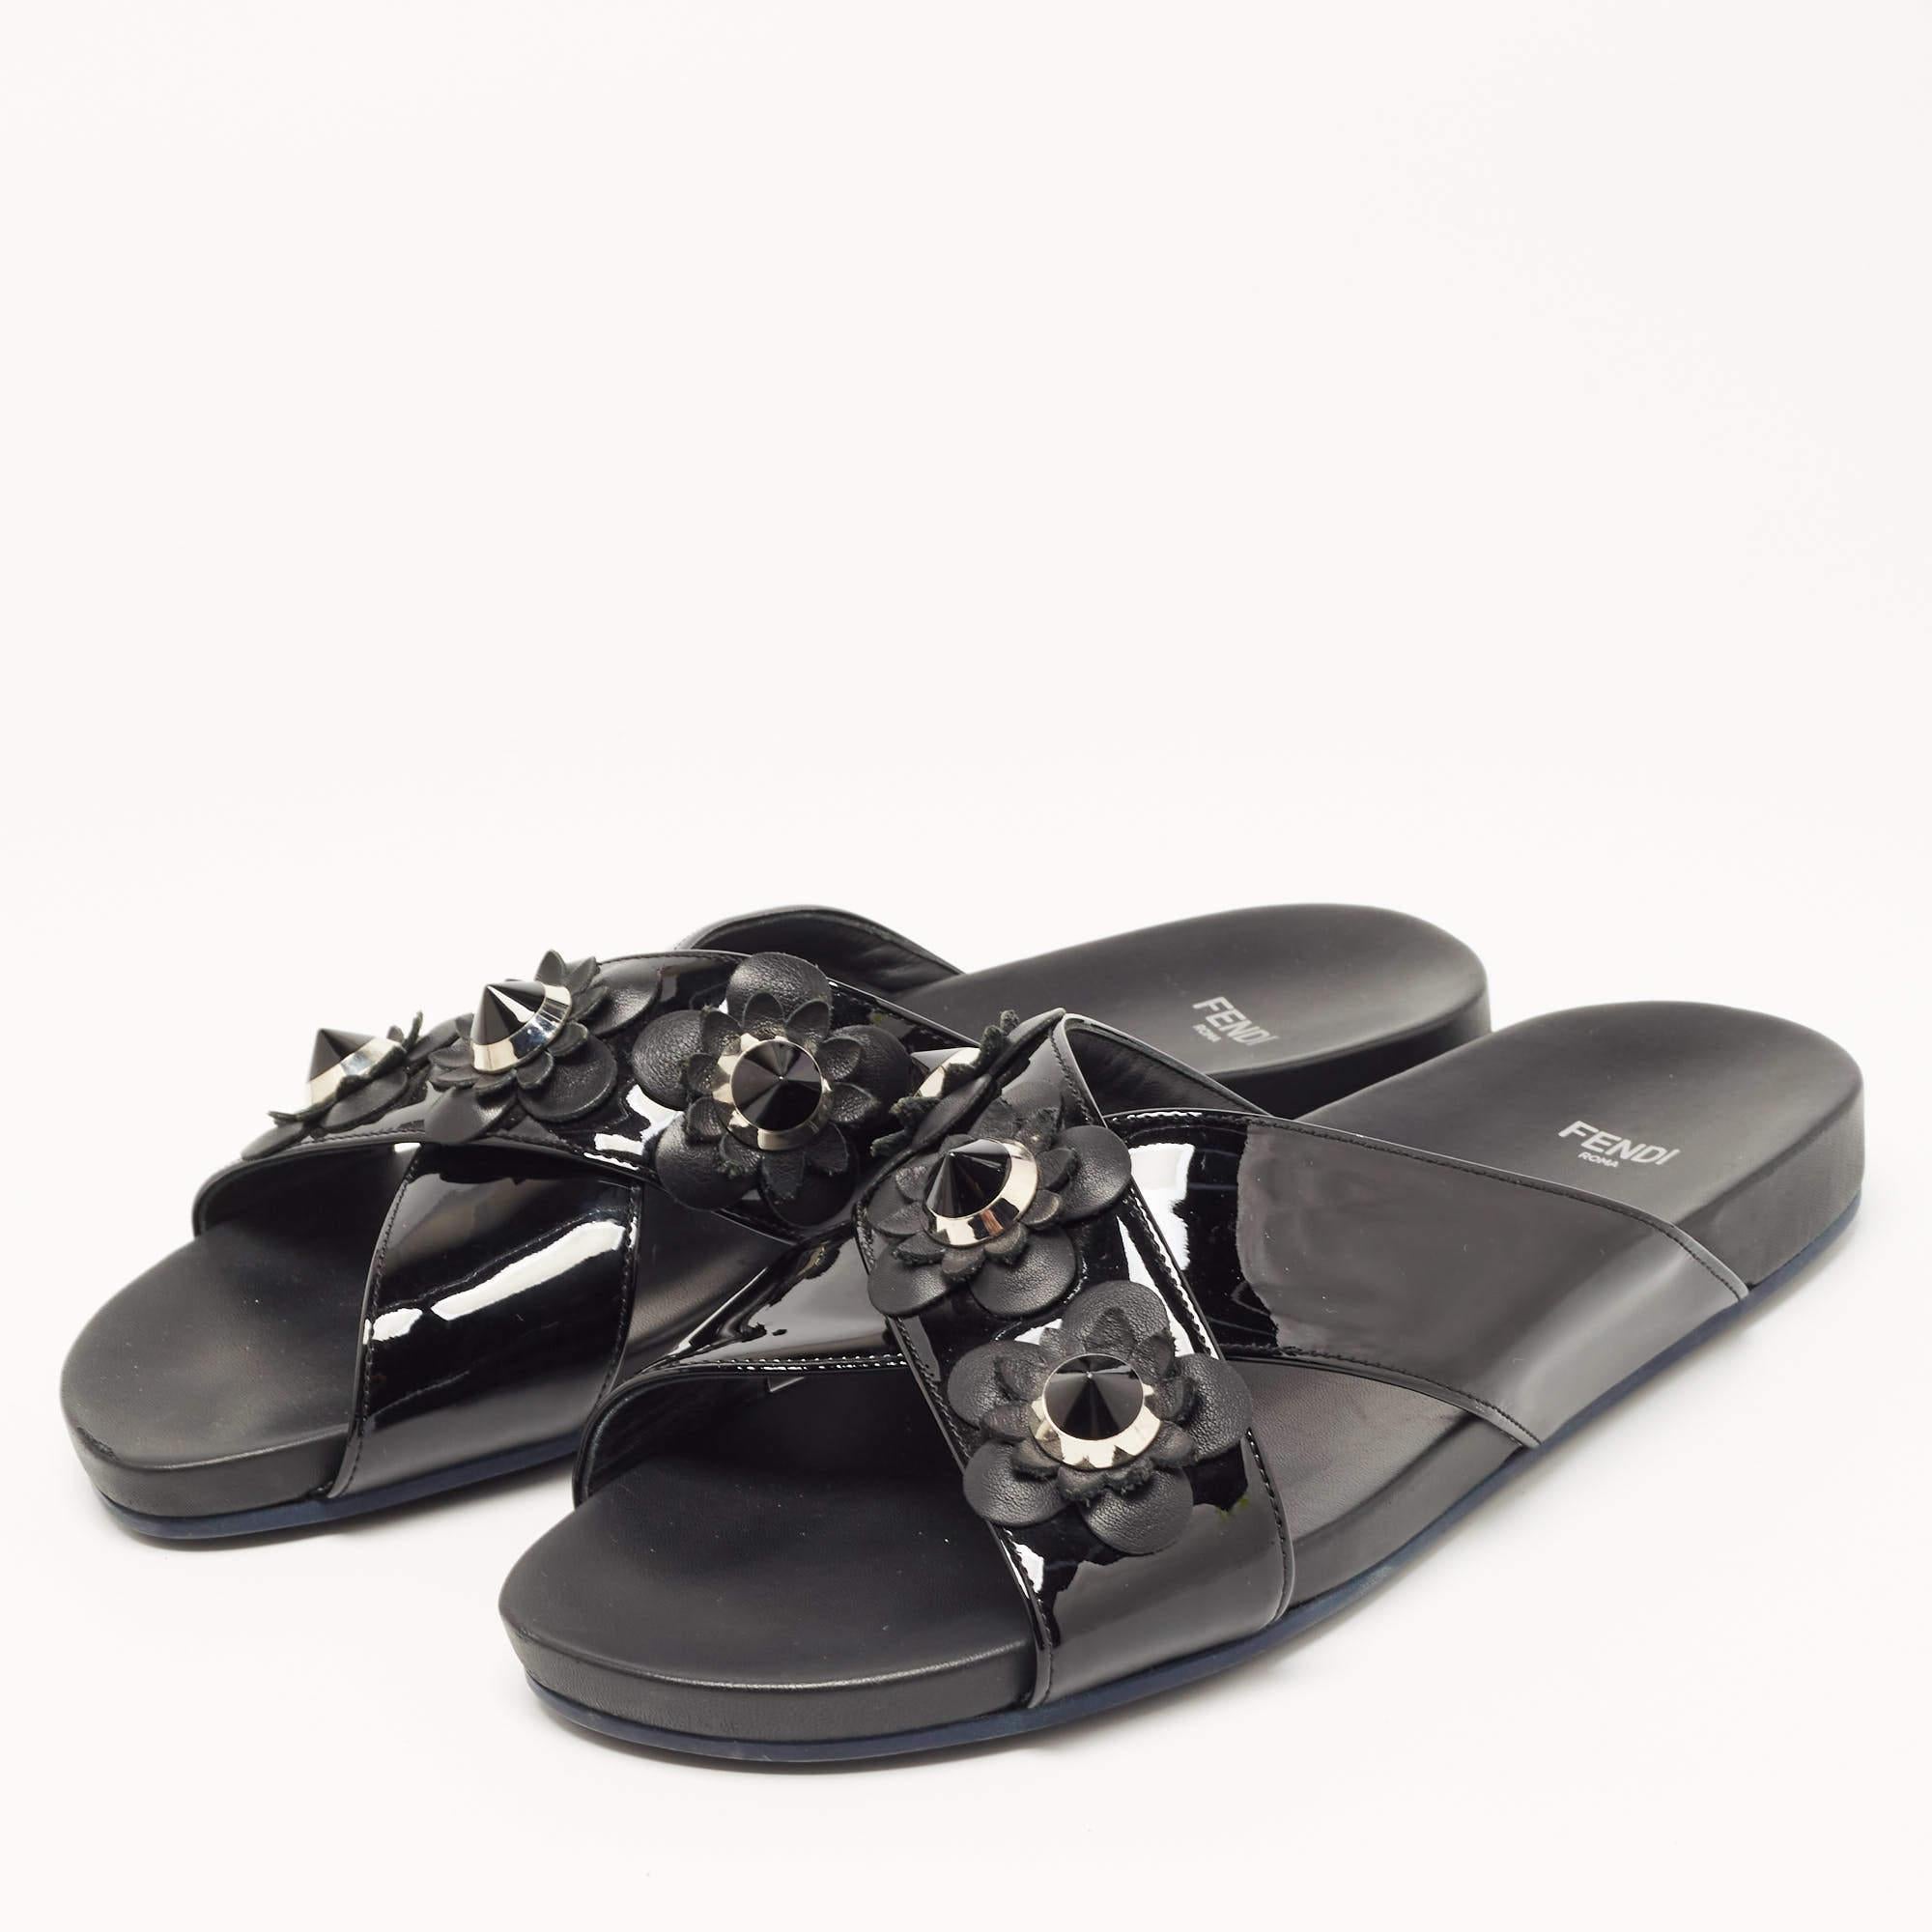 Fendi Black Patent Leather Flowerland Stud Criss Cross Flat Sandals Size 41 5